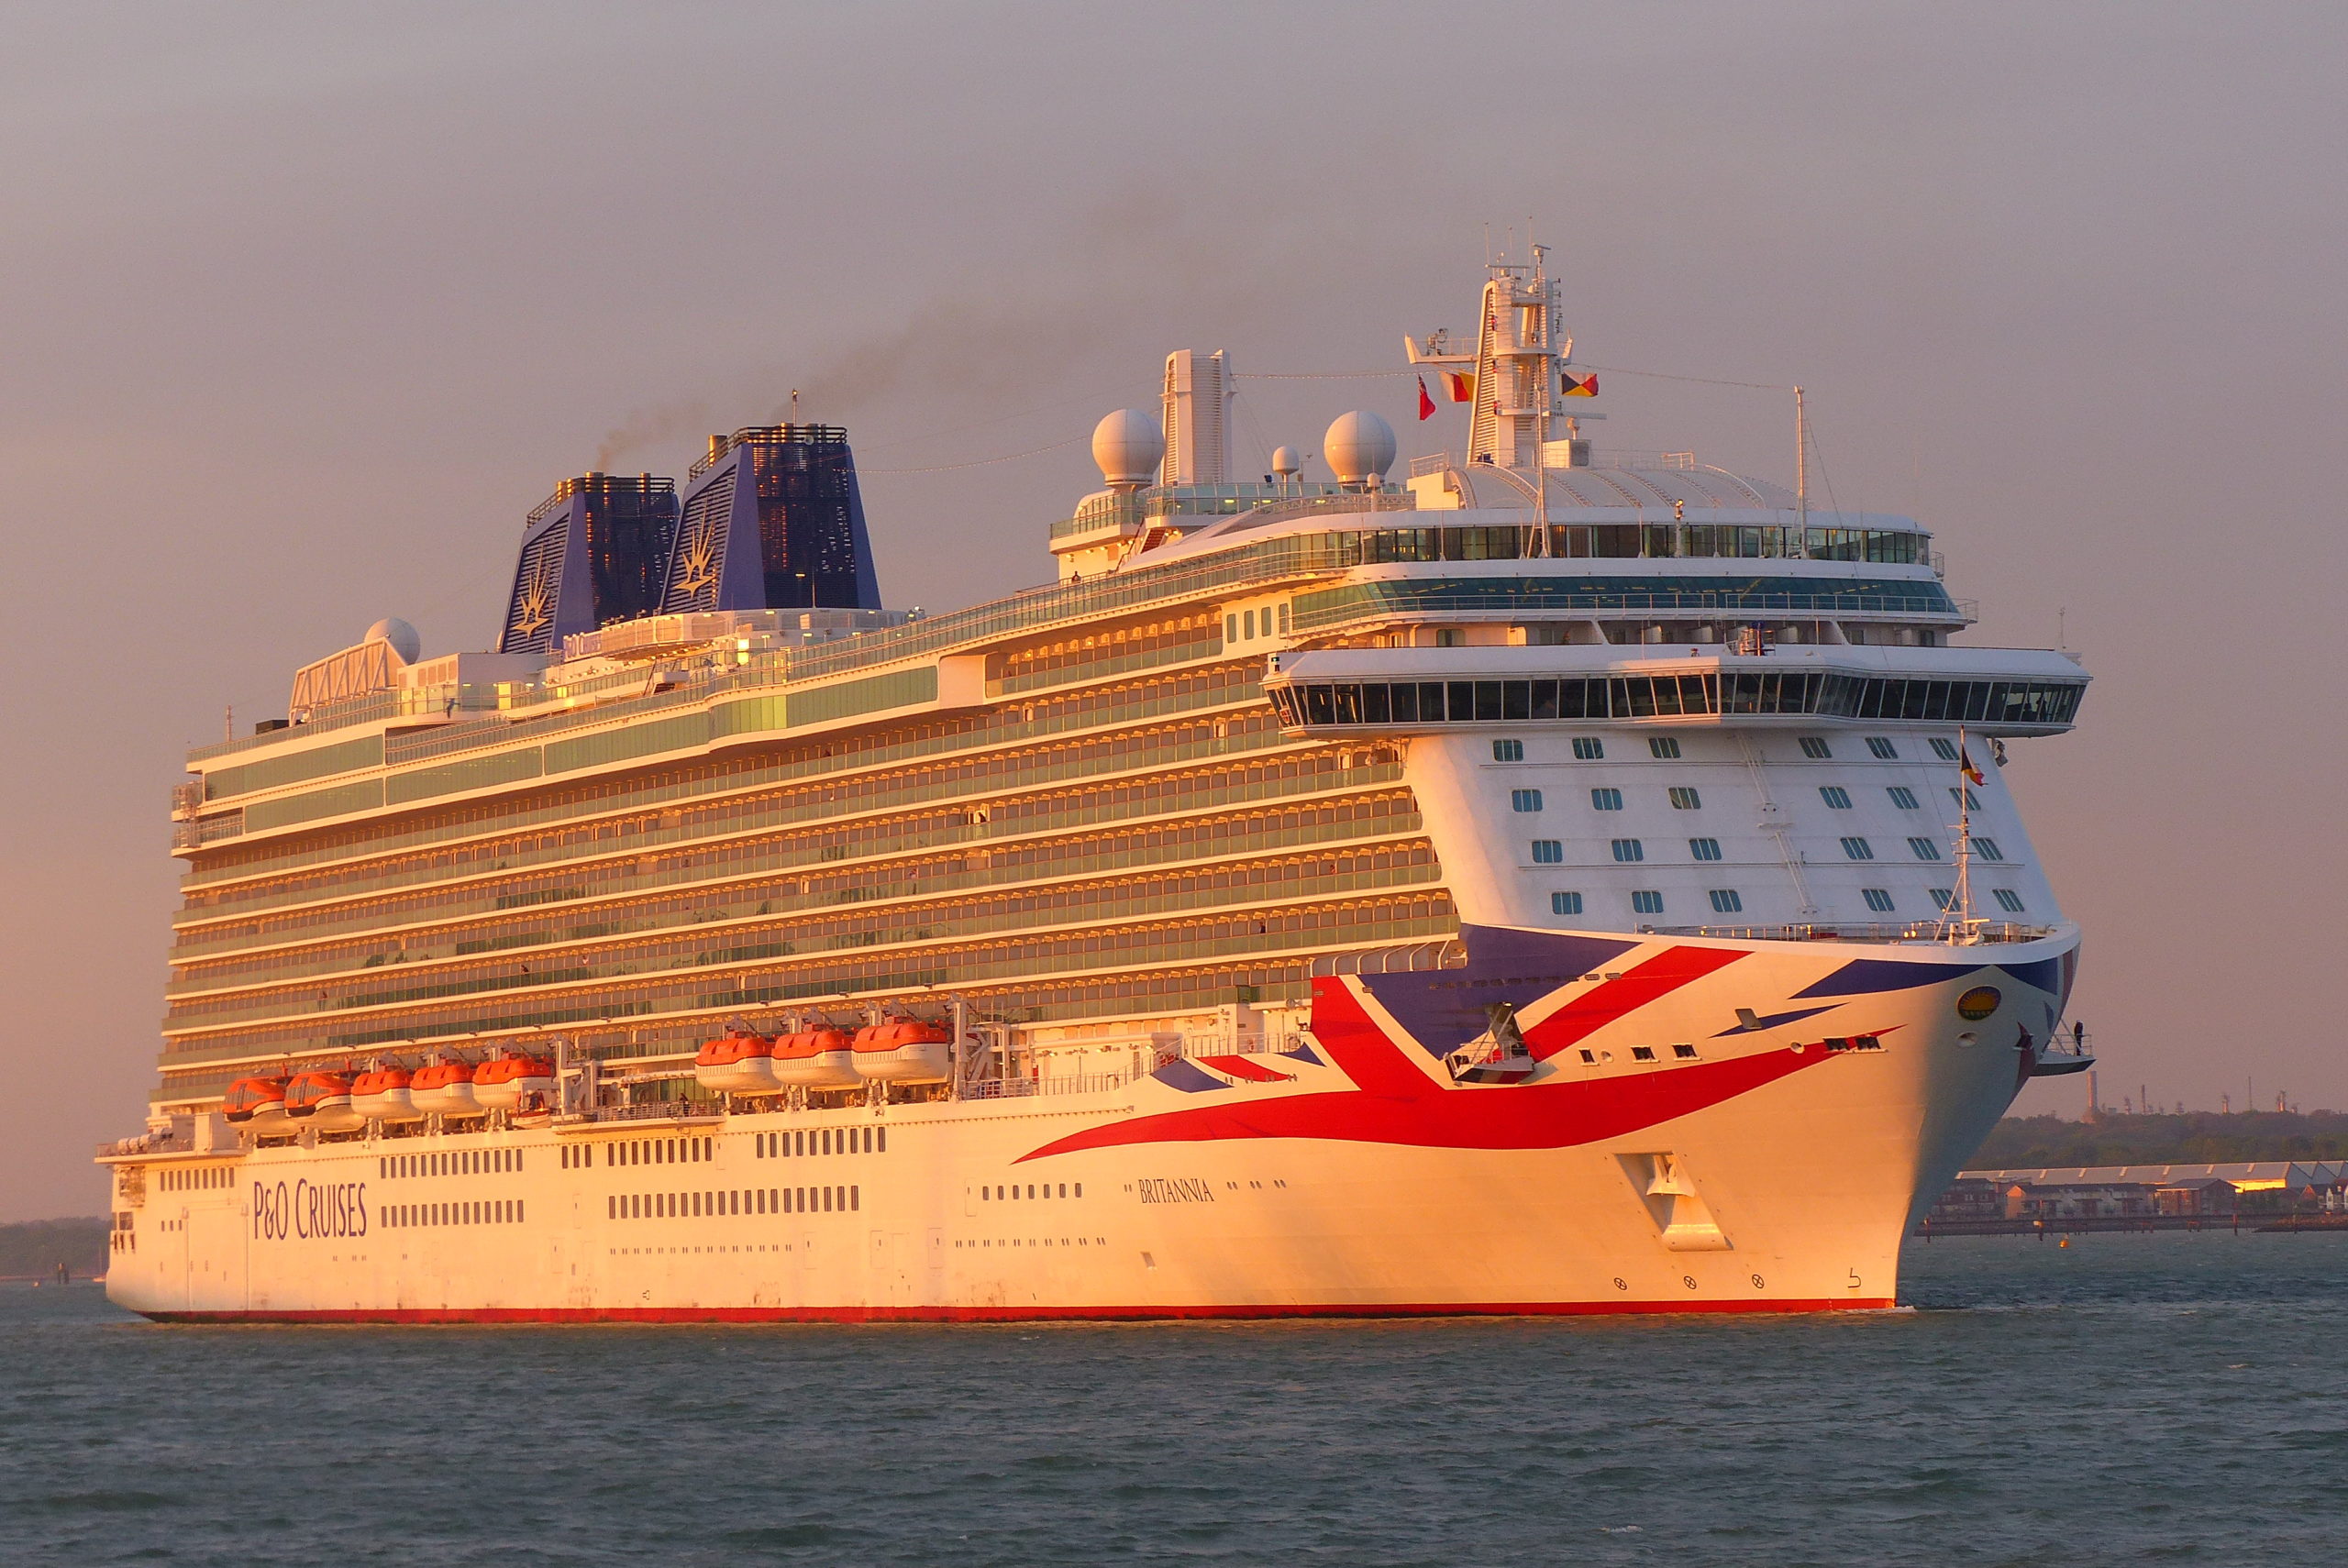 facts about britannia cruise ship